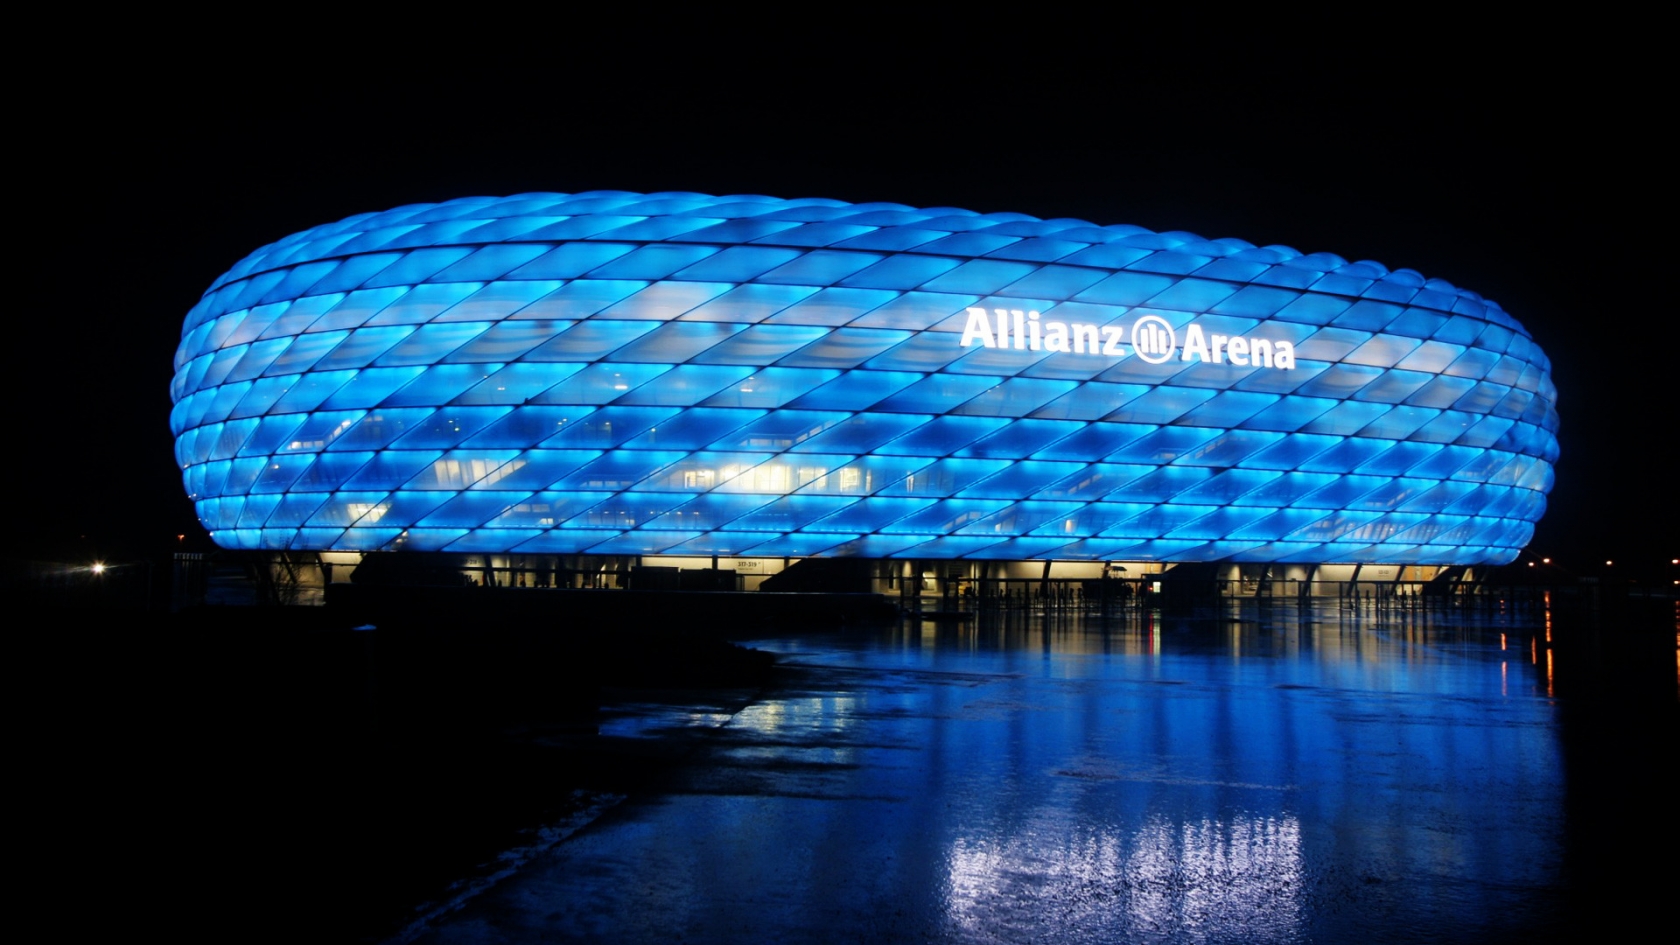 The Allianz Arena Munich for 1680 x 945 HDTV resolution